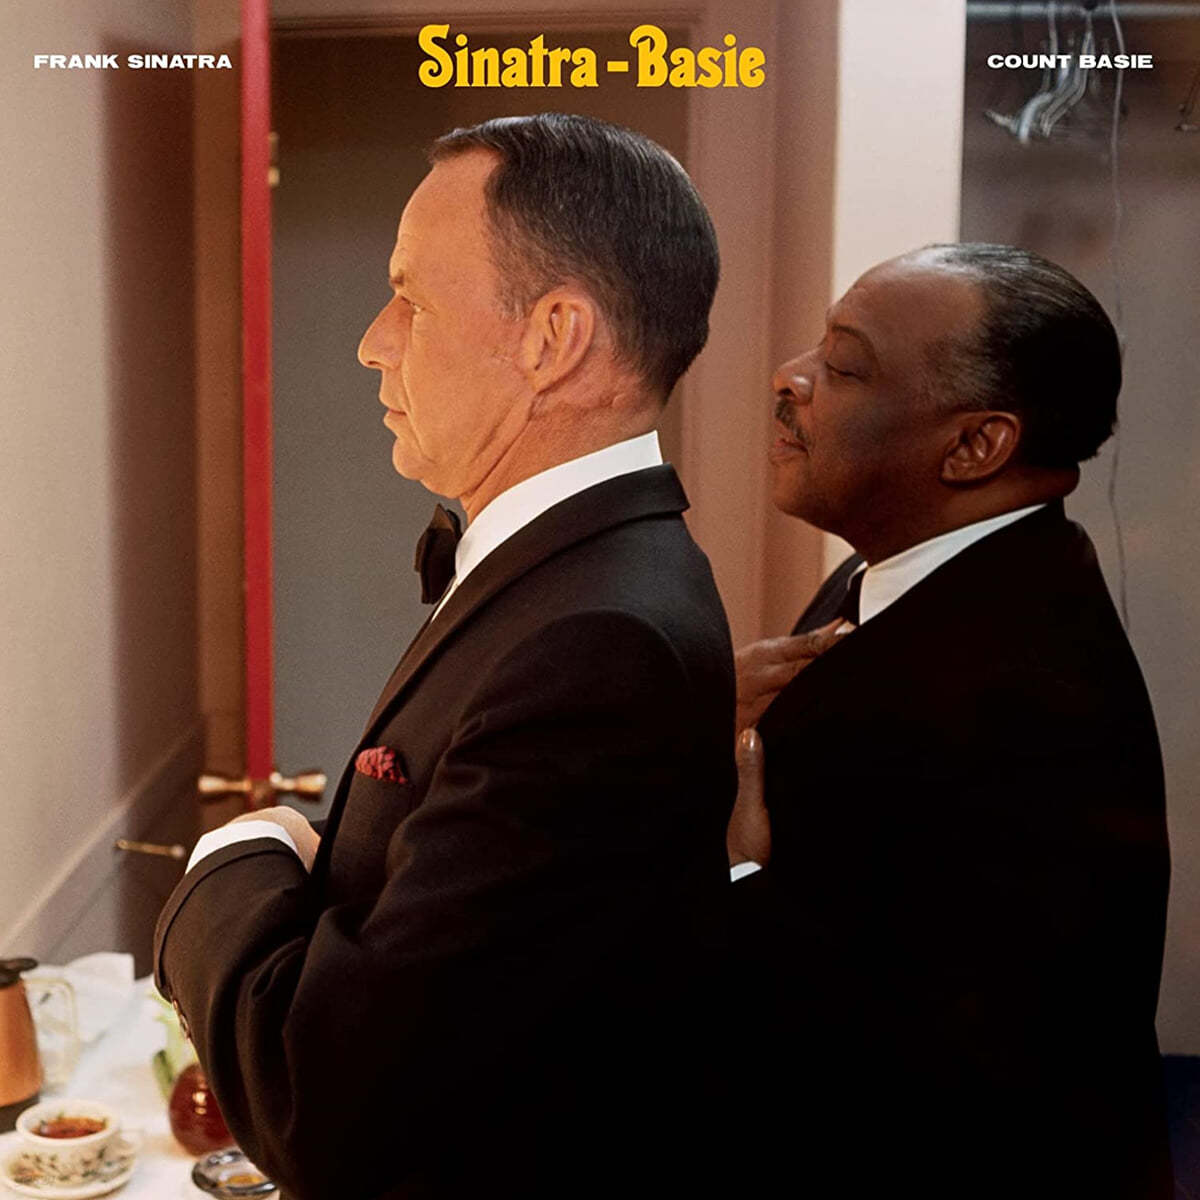 Frank Sinatra / Count Basie (프랭크 시나트라 / 카운트 베이시) - Sinatra - Basie [레드 컬러 LP] 